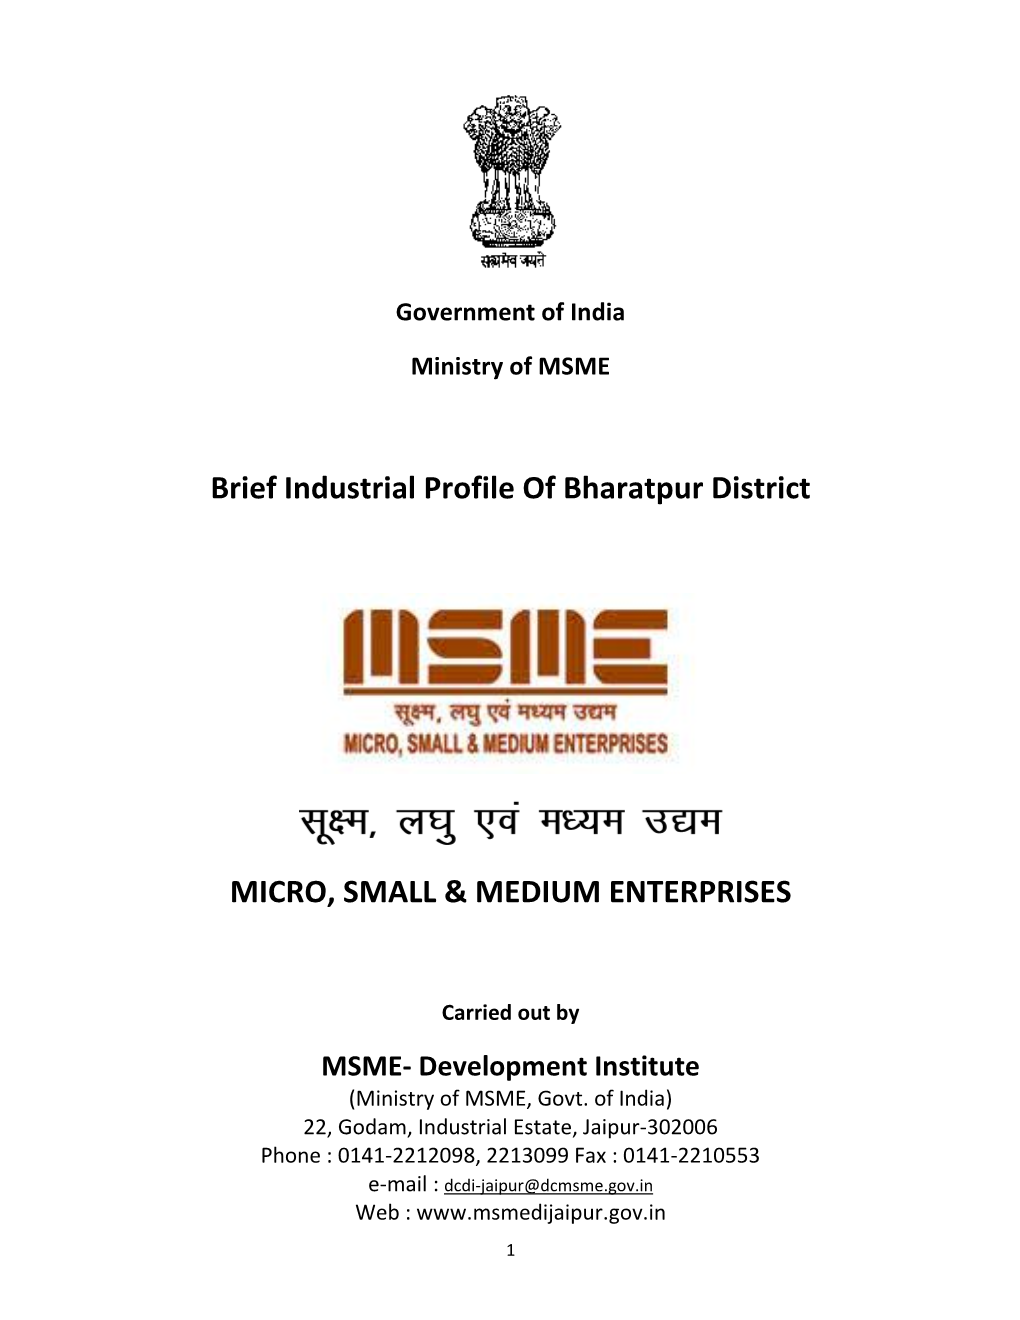 Brief Industrial Profile of Bharatpur District MICRO, SMALL & MEDIUM